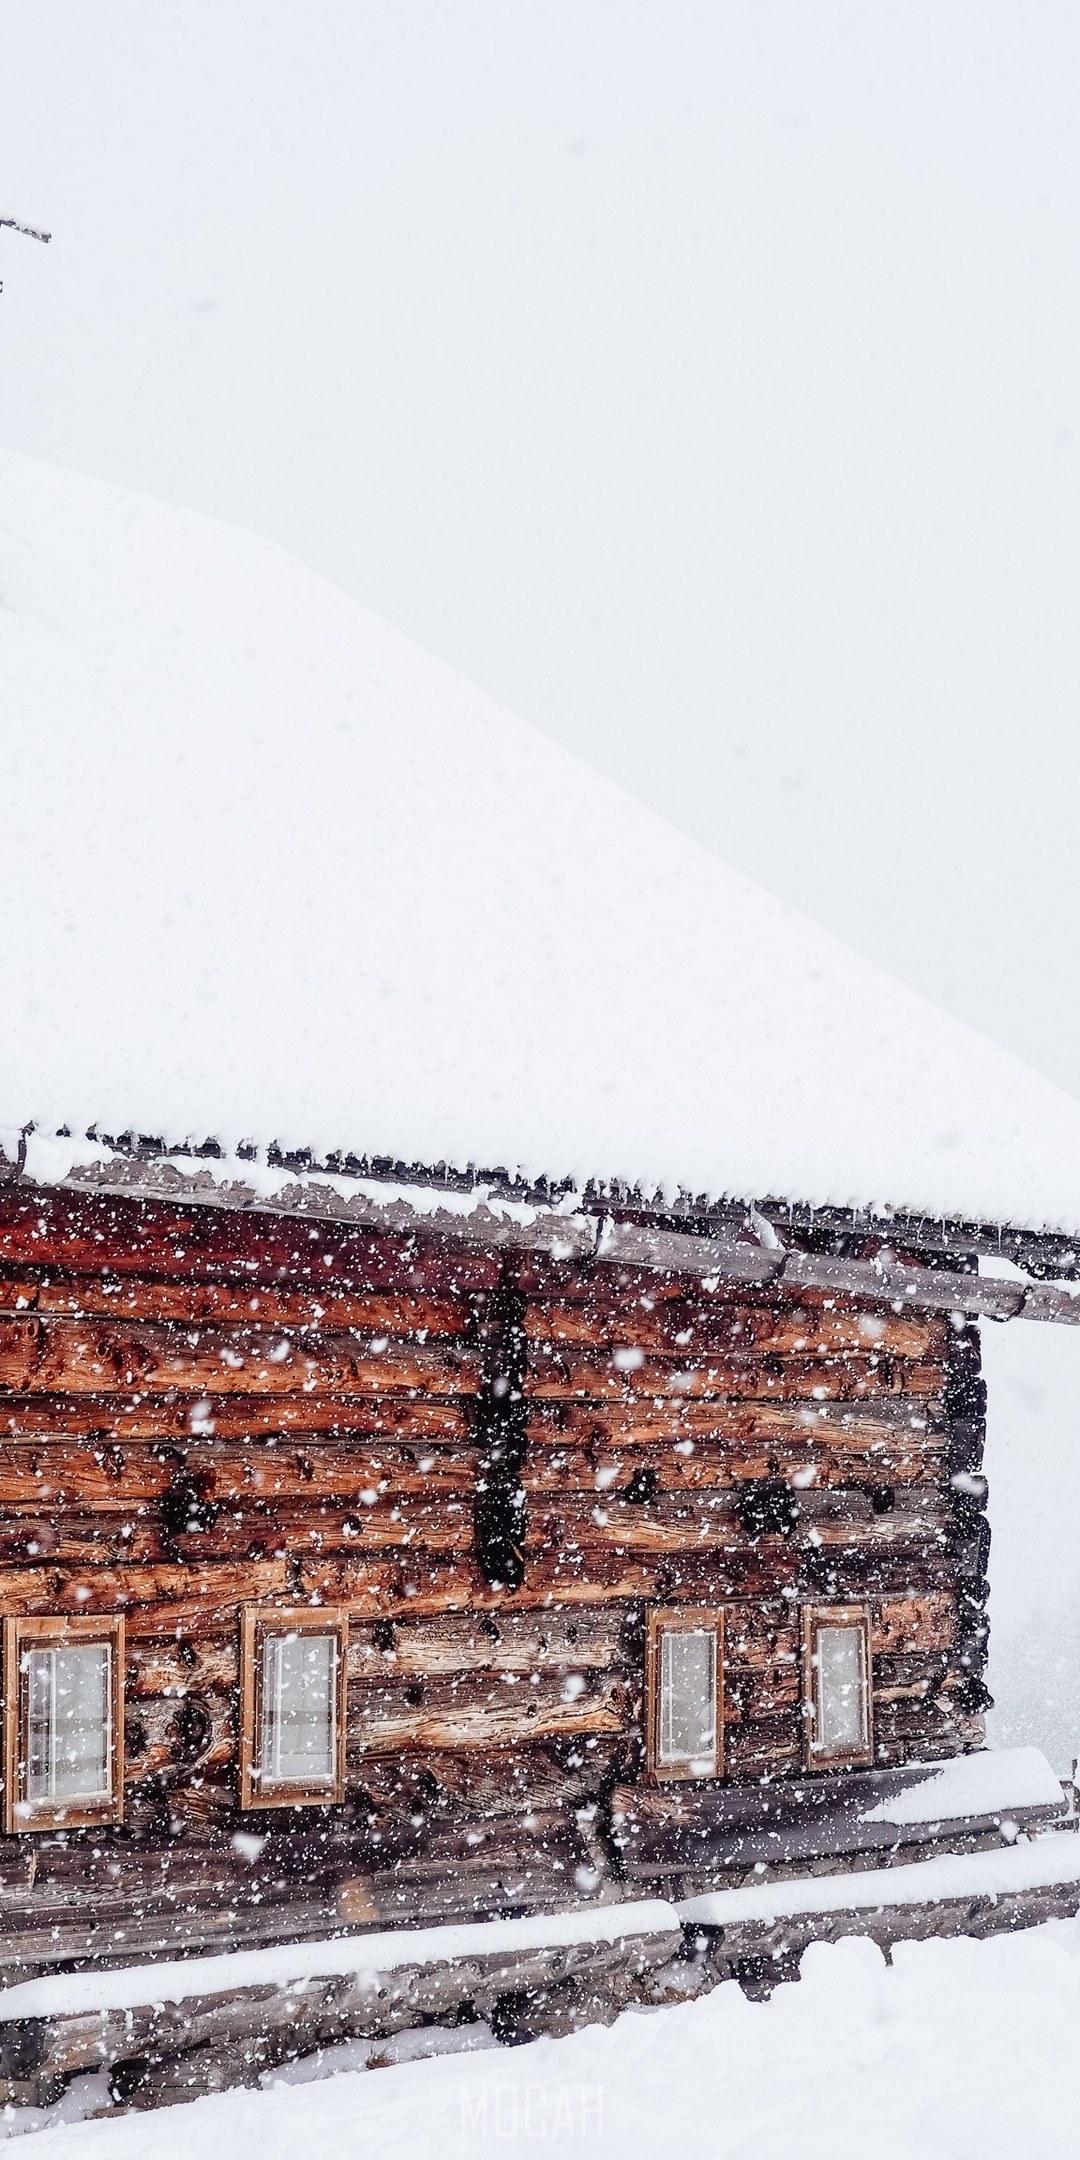 HD wallpaper, A Side View Of A Snow Covered Ski Lodge Sdwiener Htte In Austria, 1080X2160, Motorola Moto Z3 Play Wallpaper Hd, Winter Winter Winter Is Here